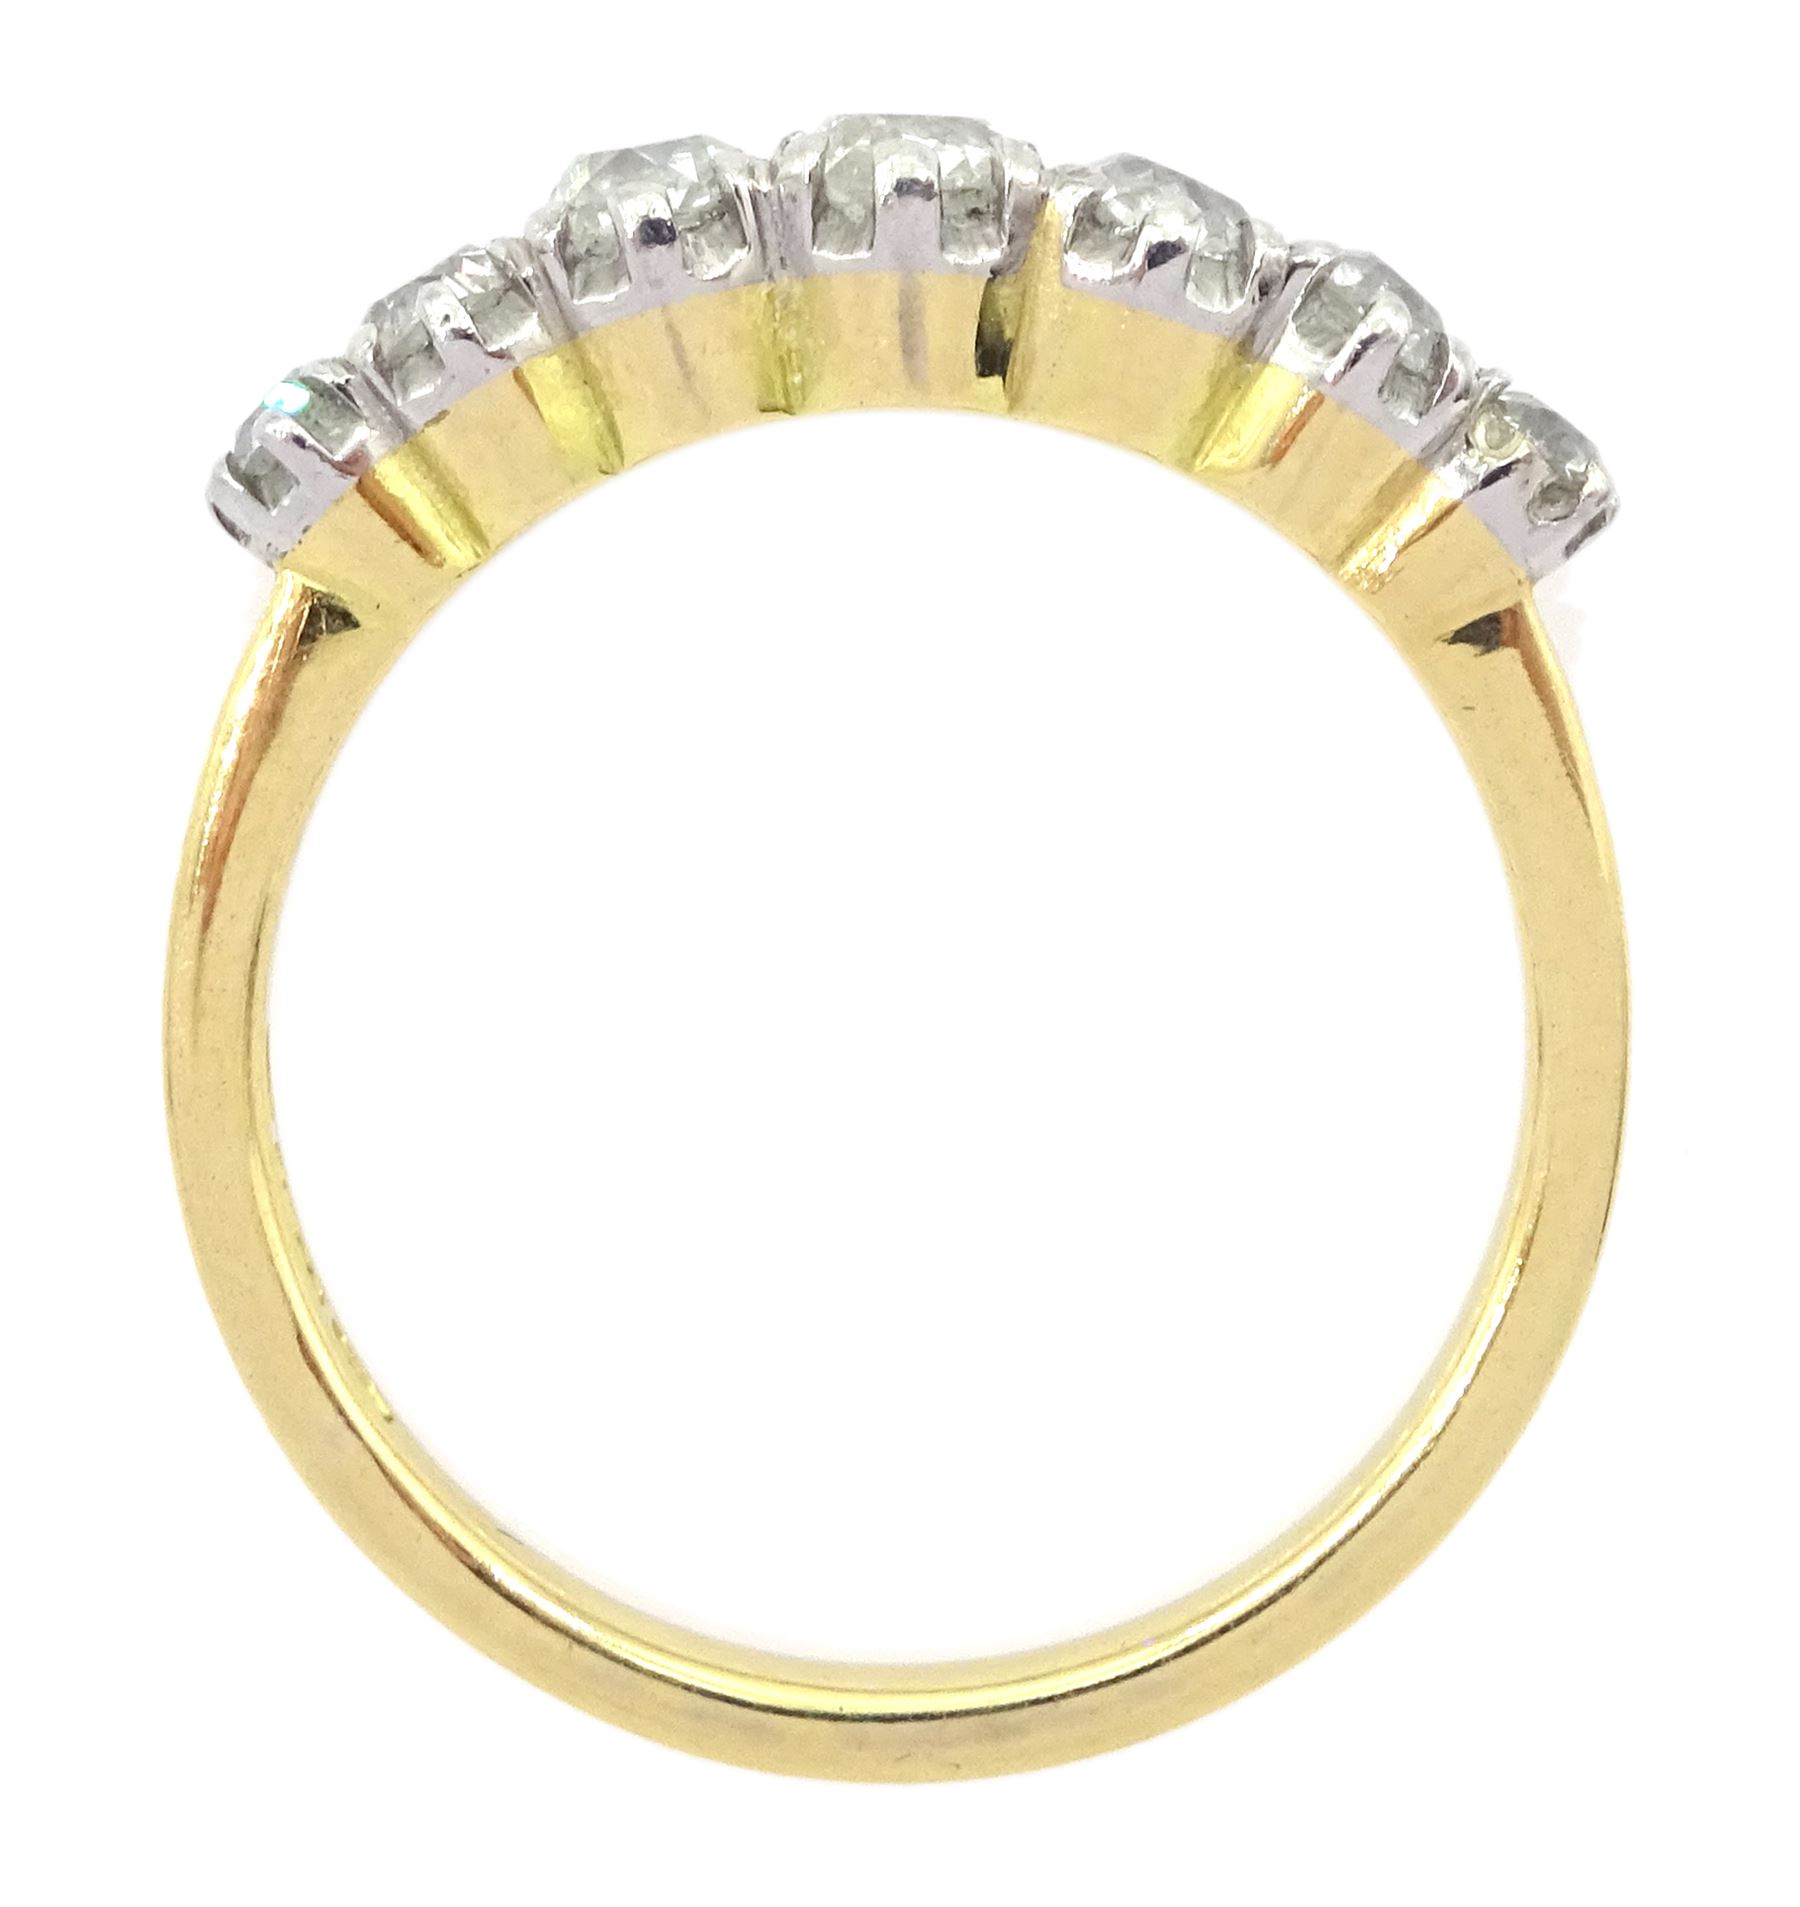 18ct gold graduating seven stone old cut diamond ring - Image 4 of 4